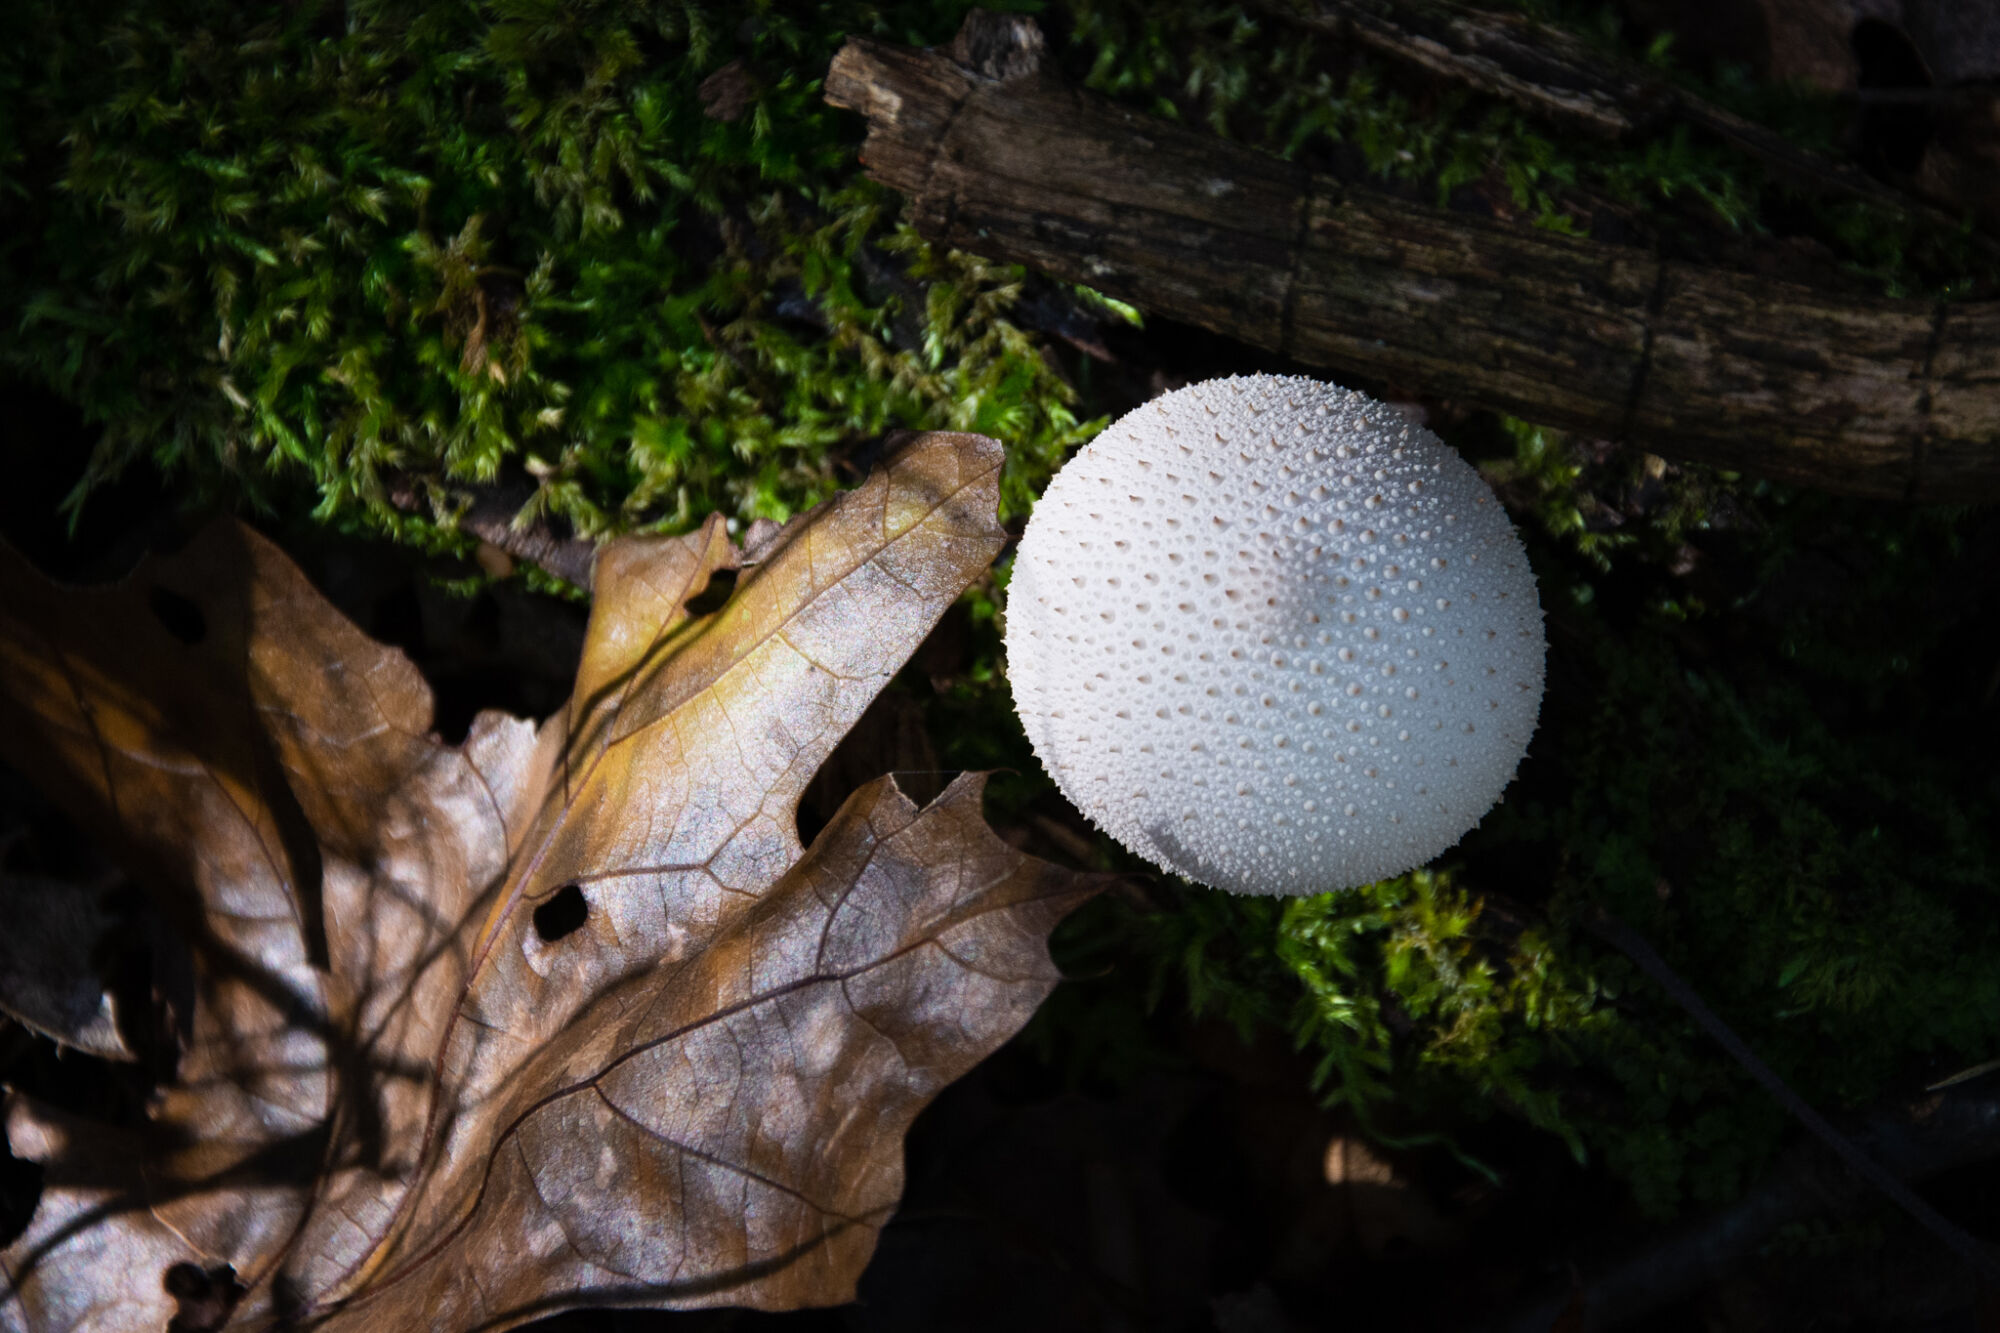 An intricately detailed puffball mushroom next to an oakleaf.